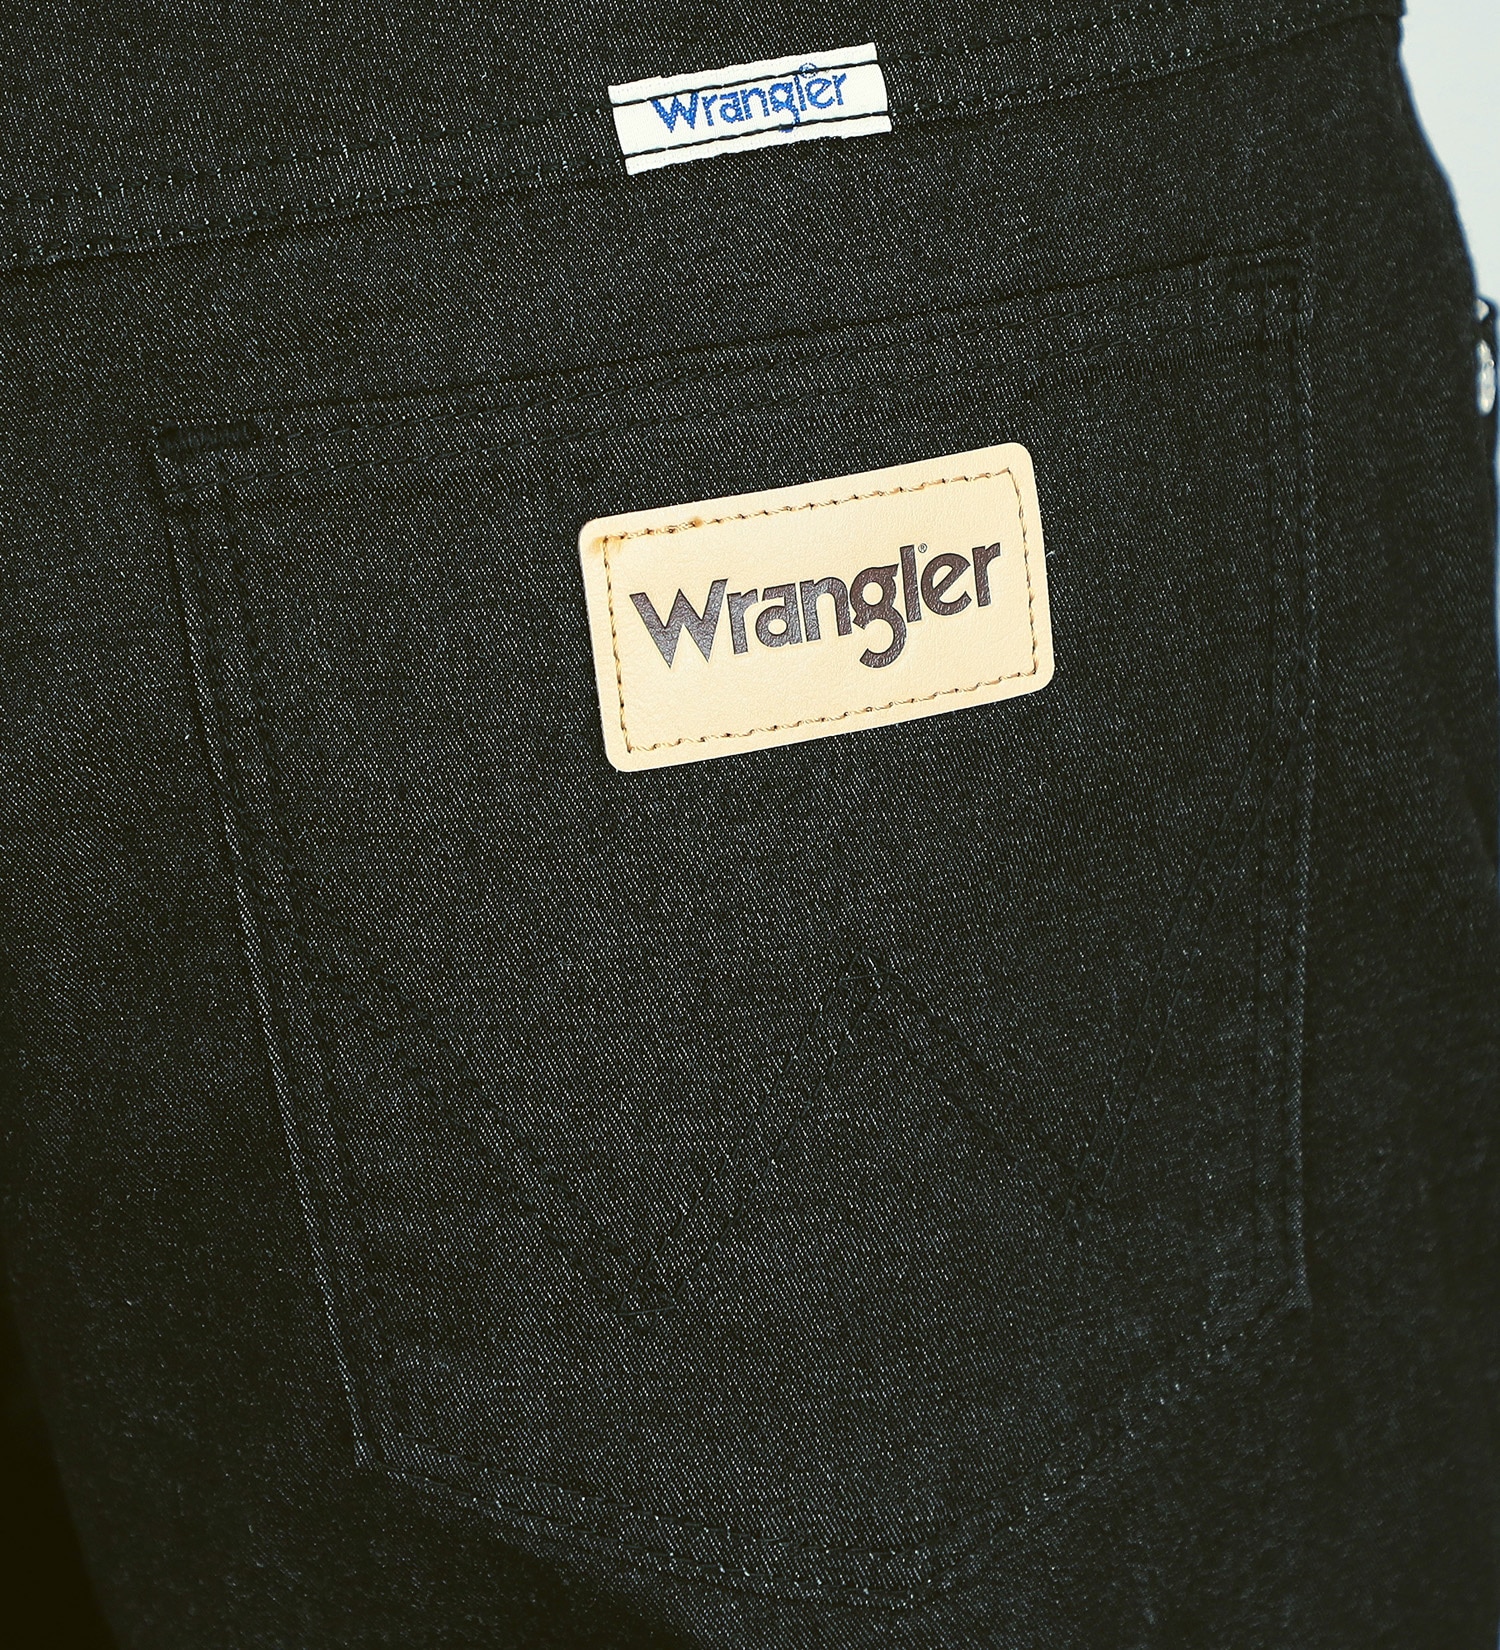 Wrangler(ラングラー)の365日快適　ストレッチ ストレートパンツ|パンツ/パンツ/メンズ|ブラック